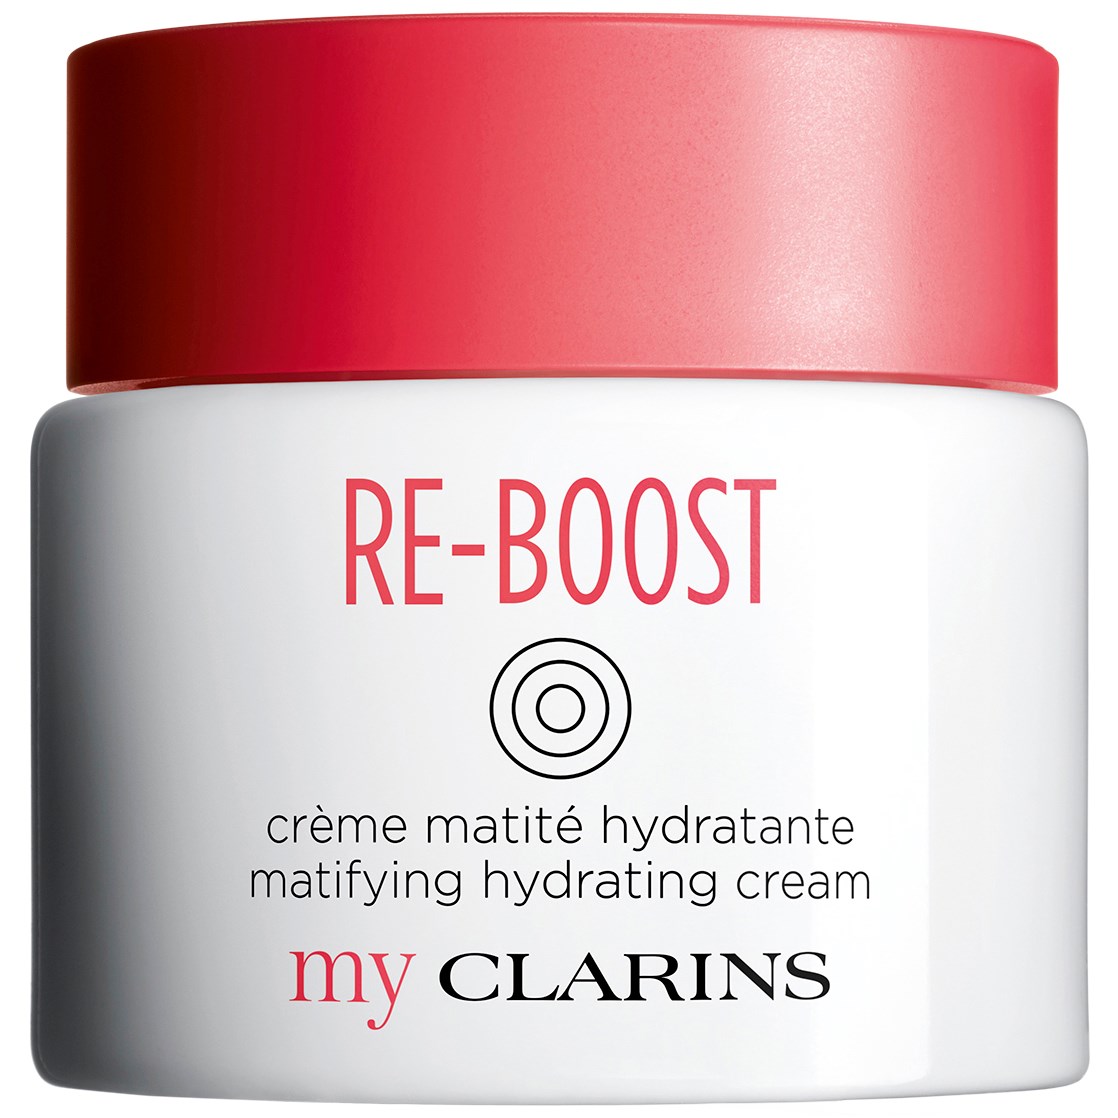 Clarins Myclarins Re-Boost Matifying Hydrating Cream 50 ml